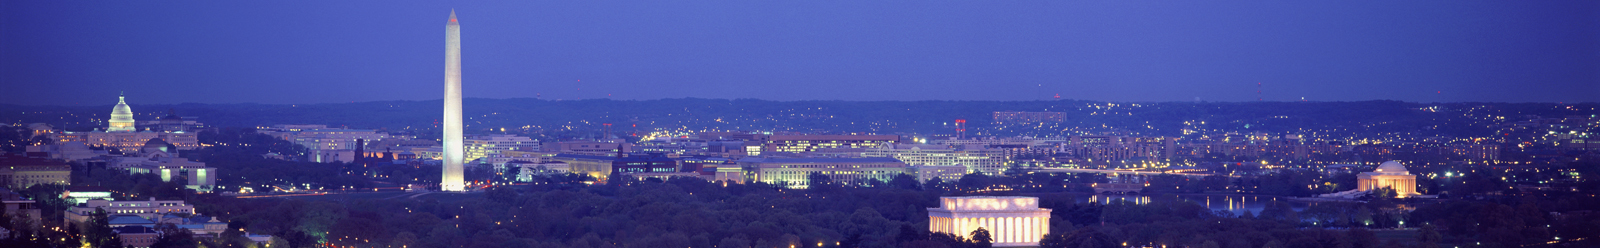 Aerial view of DC at night. Photo credit: Joseph Sohm / Shutterstock